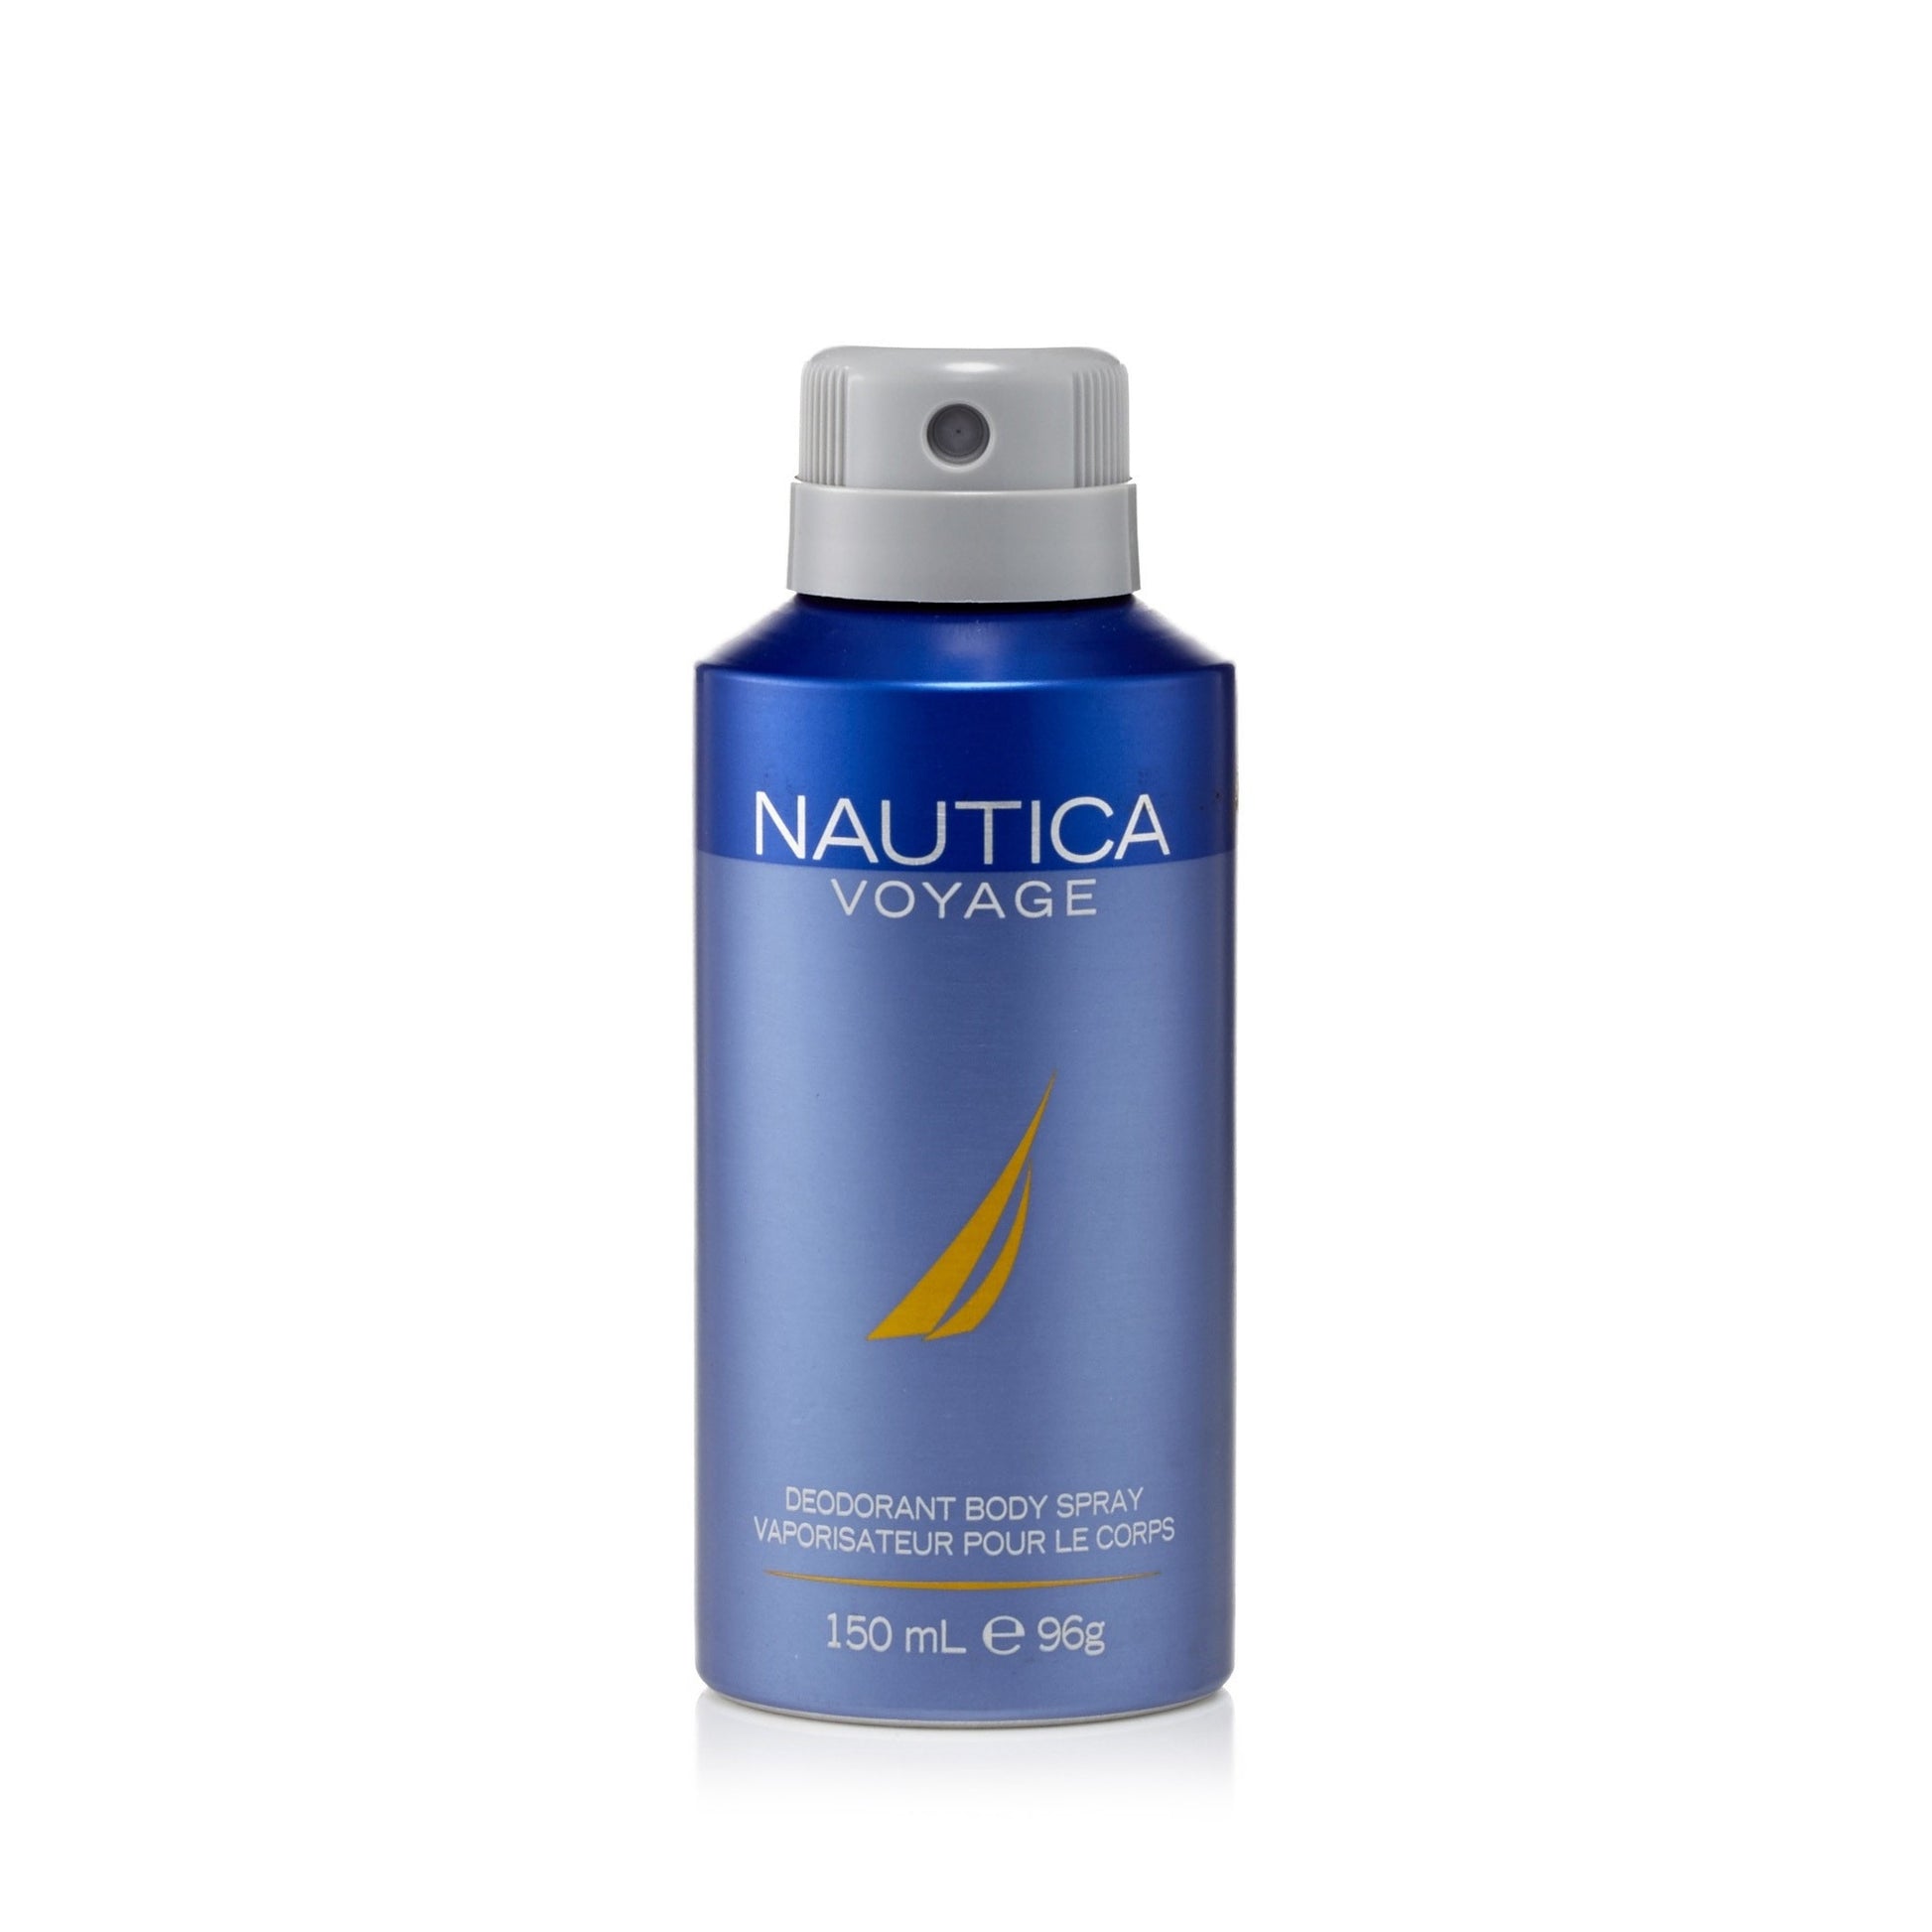 Nautica Voyage Deodorant Body Mens Spray 5.0 oz.  Click to open in modal